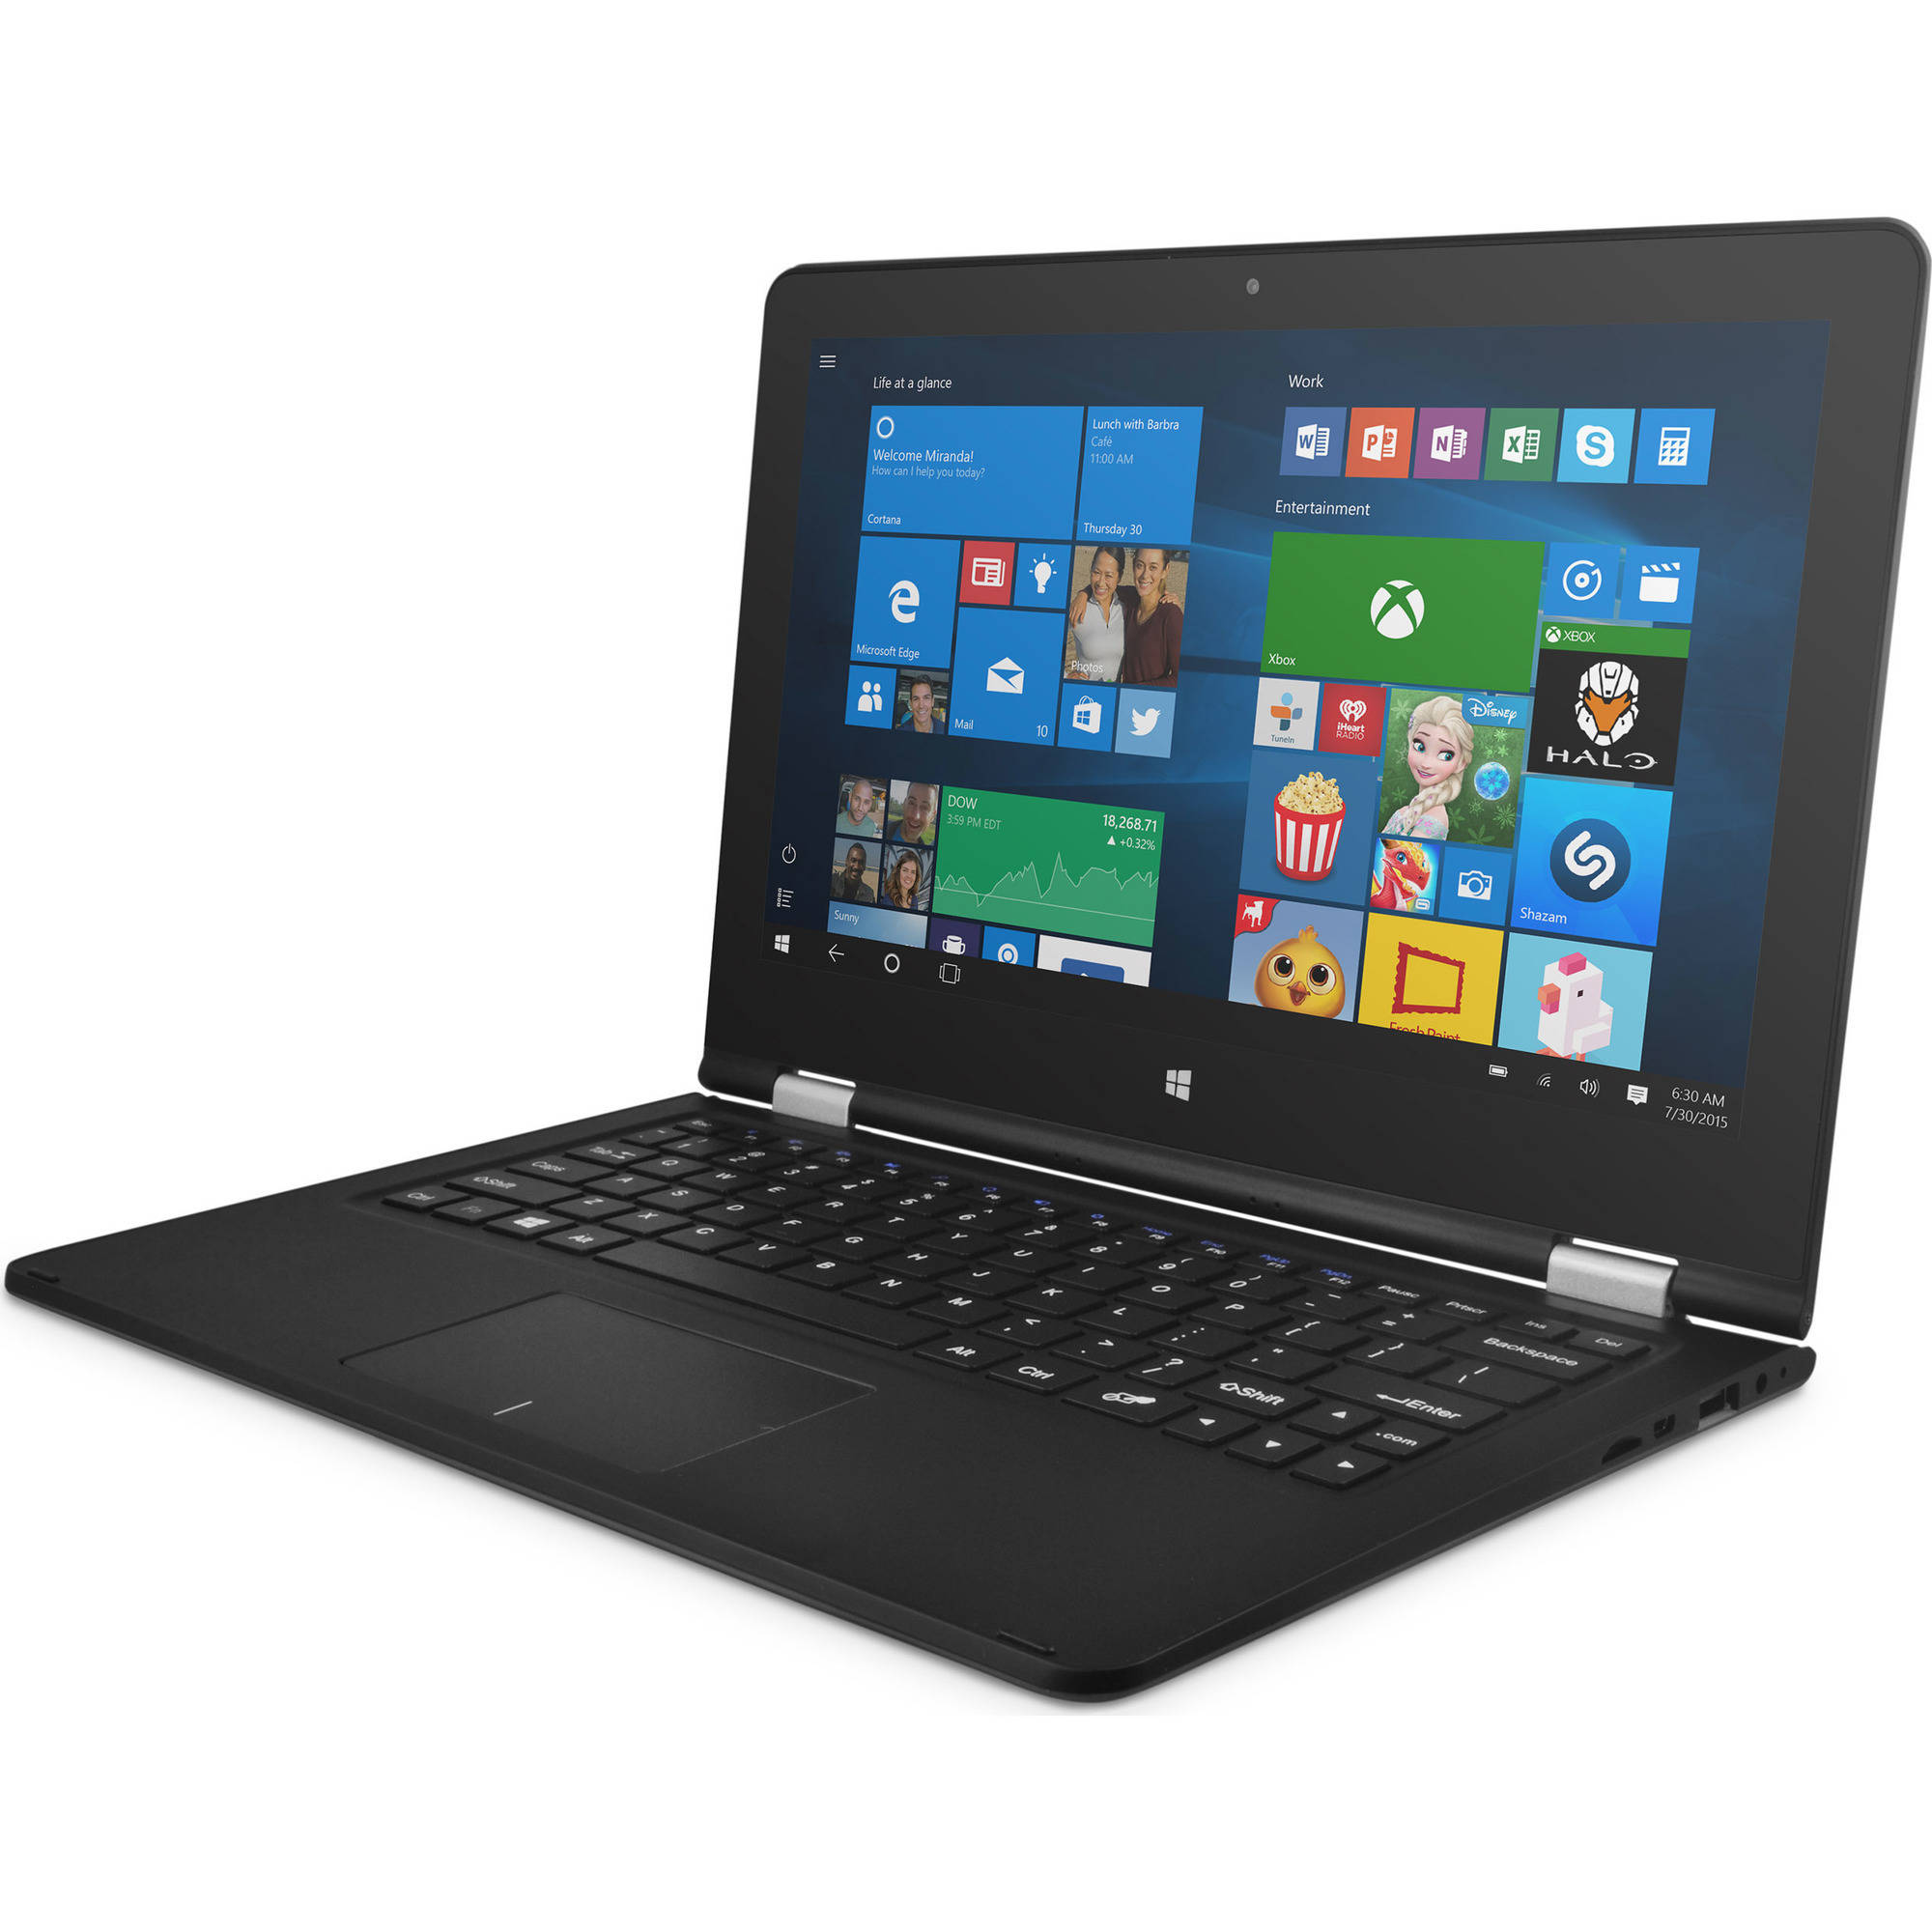 Ematic 11.6" Laptop, Touchscreen, 2-in-1, Windows 10, Intel Atom Quad-Core Processor, 2GB RAM, 32GB Flash Storage - image 2 of 6